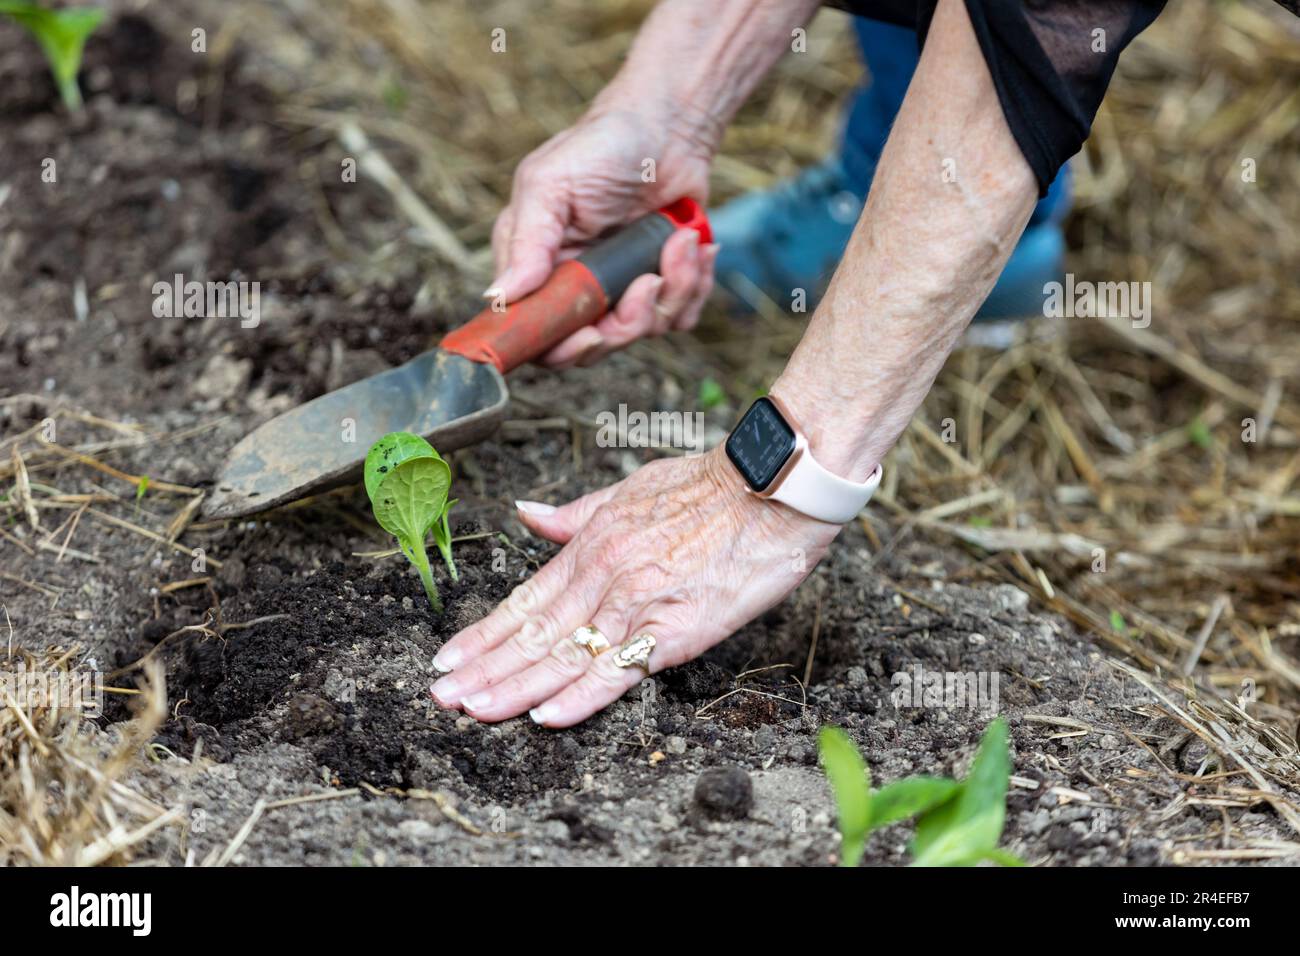 Hands planting new vegetables in garden soil. Stock Photo